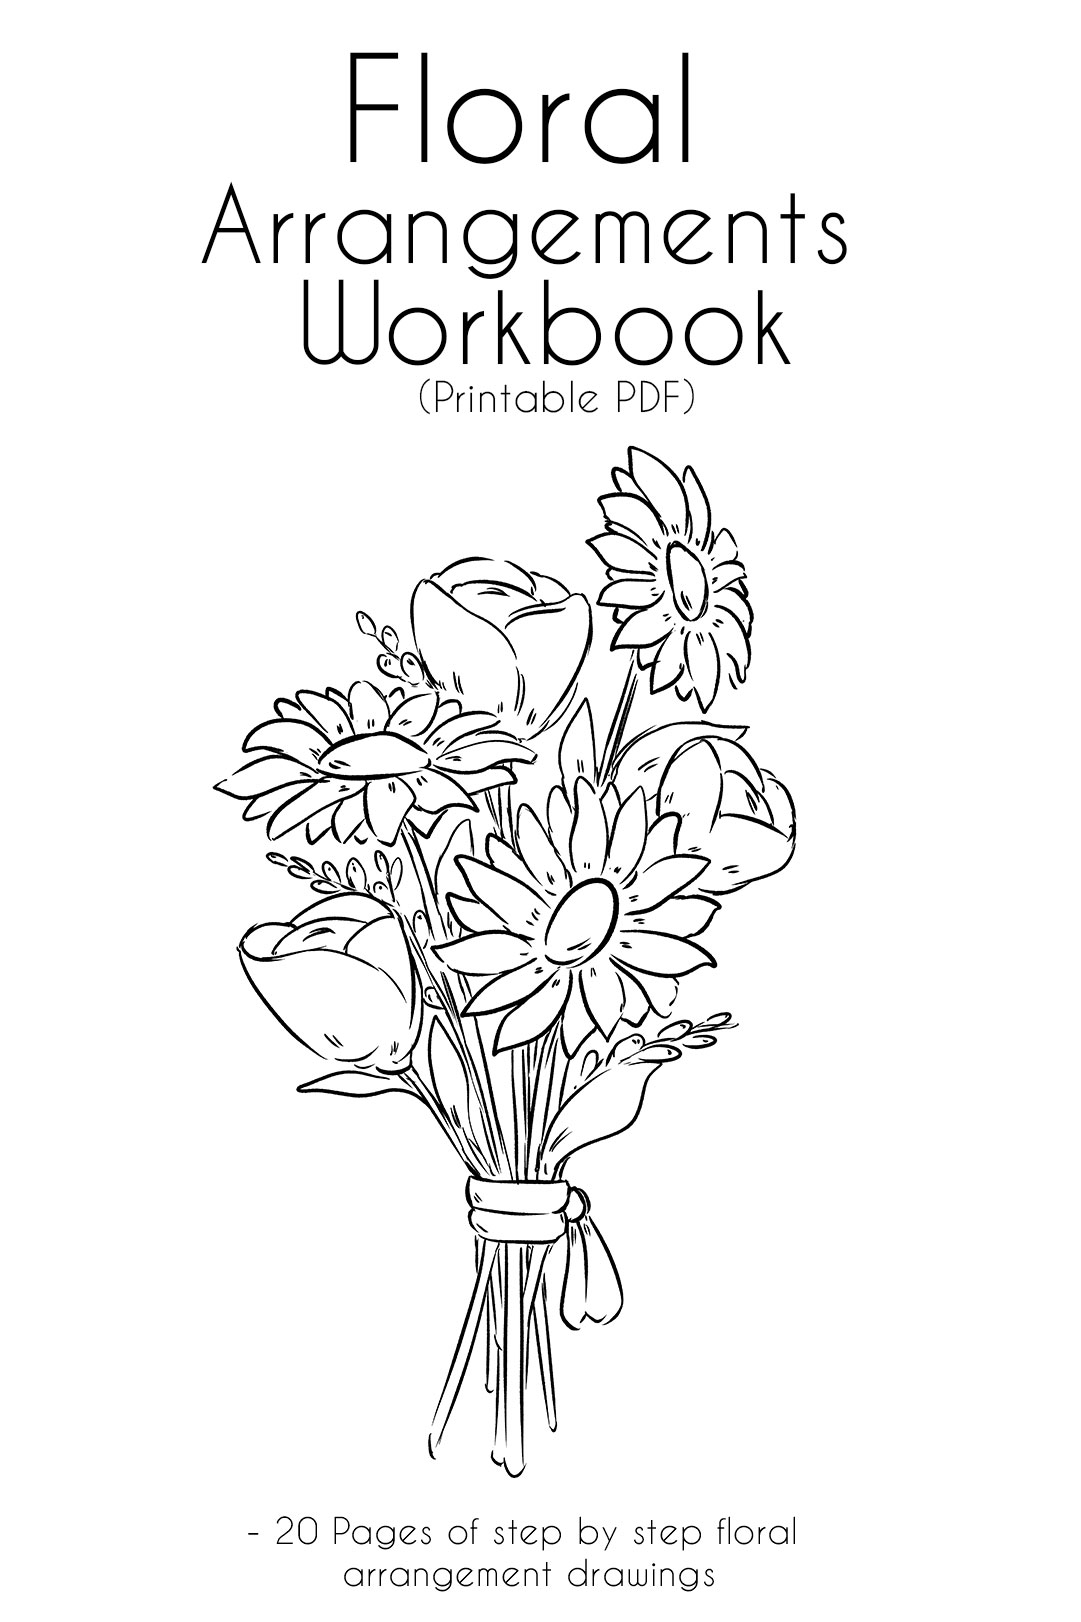 How to Draw Flowers : Step by Step Printable PDF Workbook ...